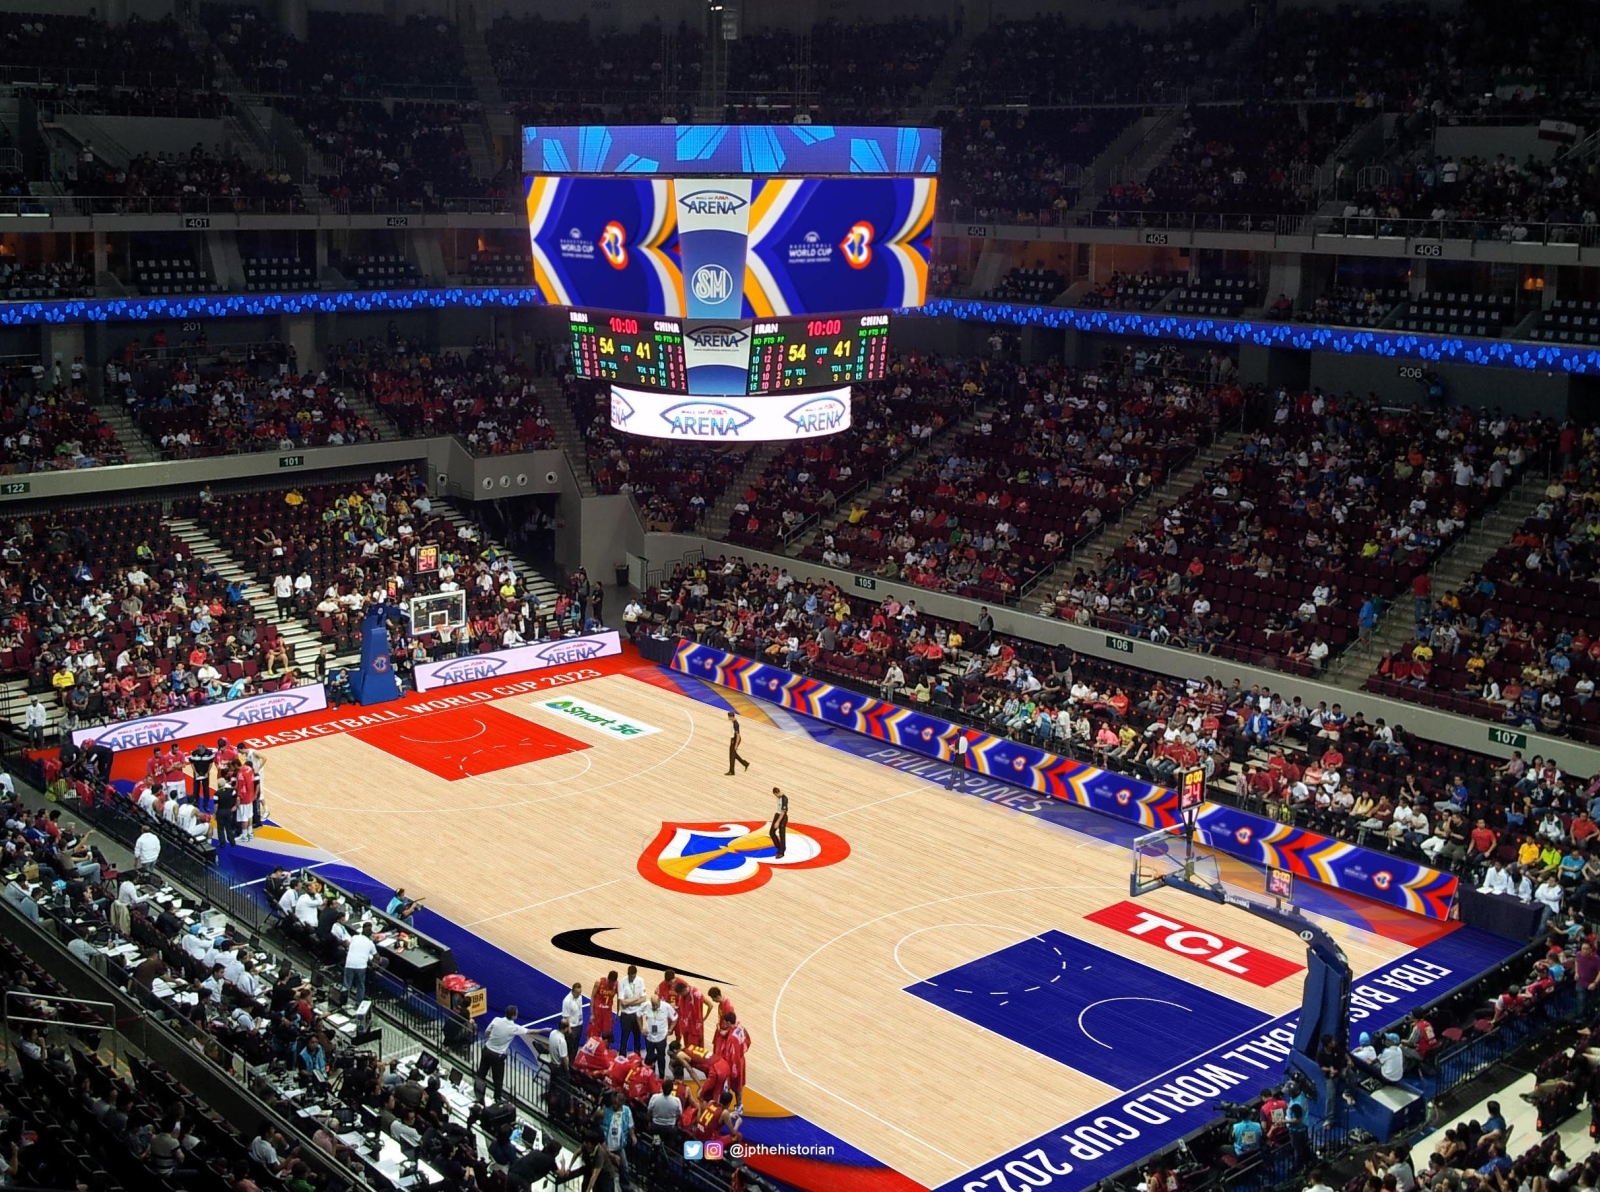 FIBA World Cup 2023 Arena Floor Design by 𝕵𝖔𝖍𝖓 𝕻𝖆𝖚𝖑 𝕮𝖆𝖓𝖔𝖓𝖎𝖌𝖔 on Dribbble